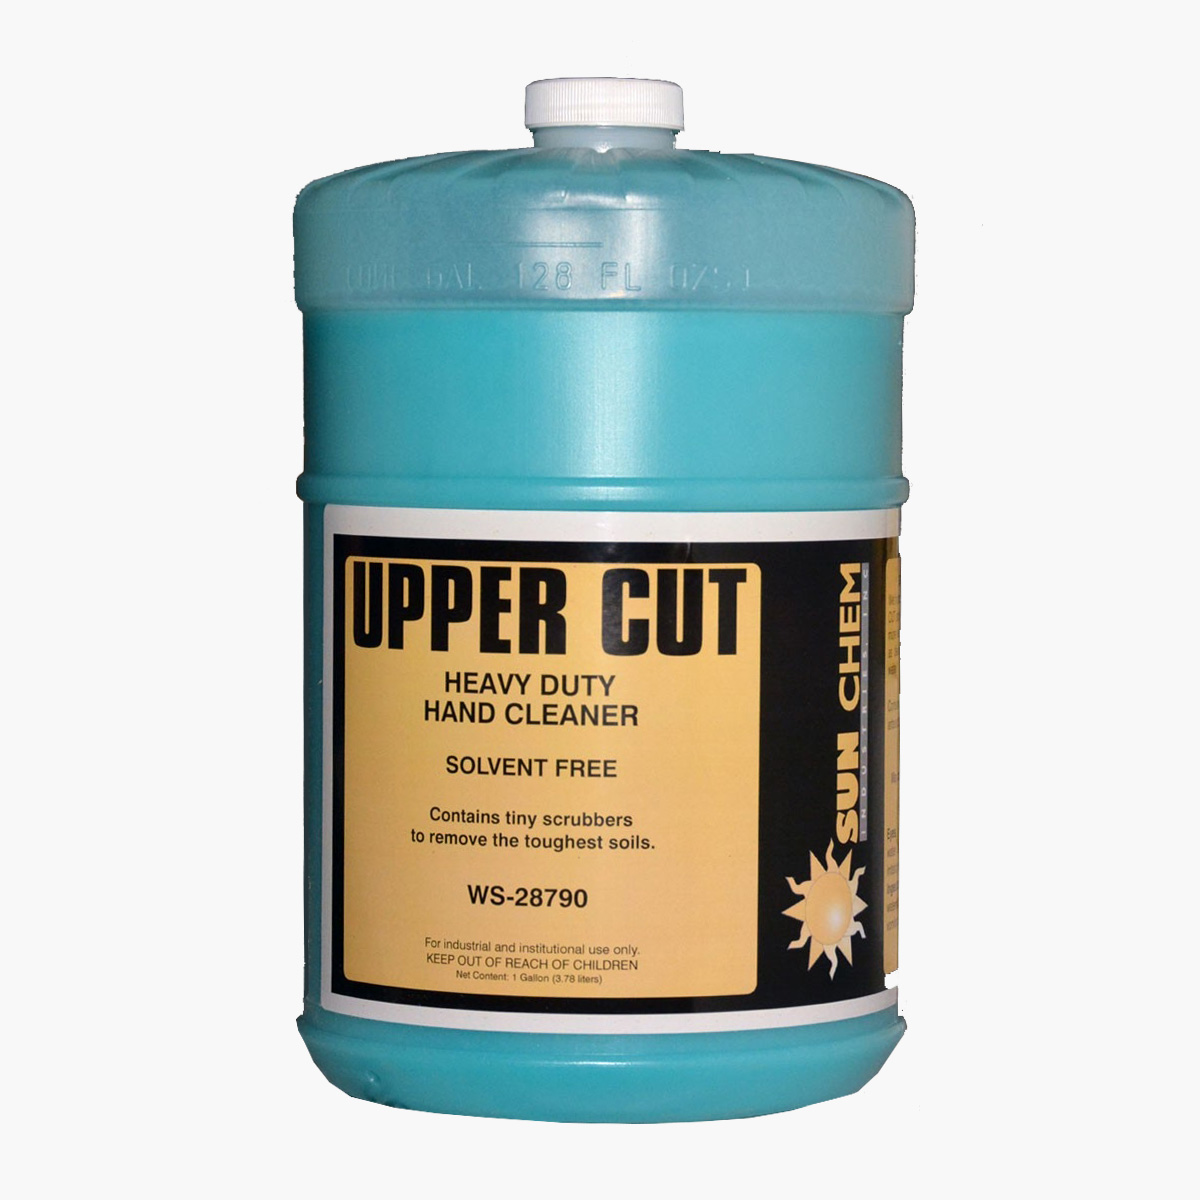 Uppercutt hand cleaner – SunChemIndustries